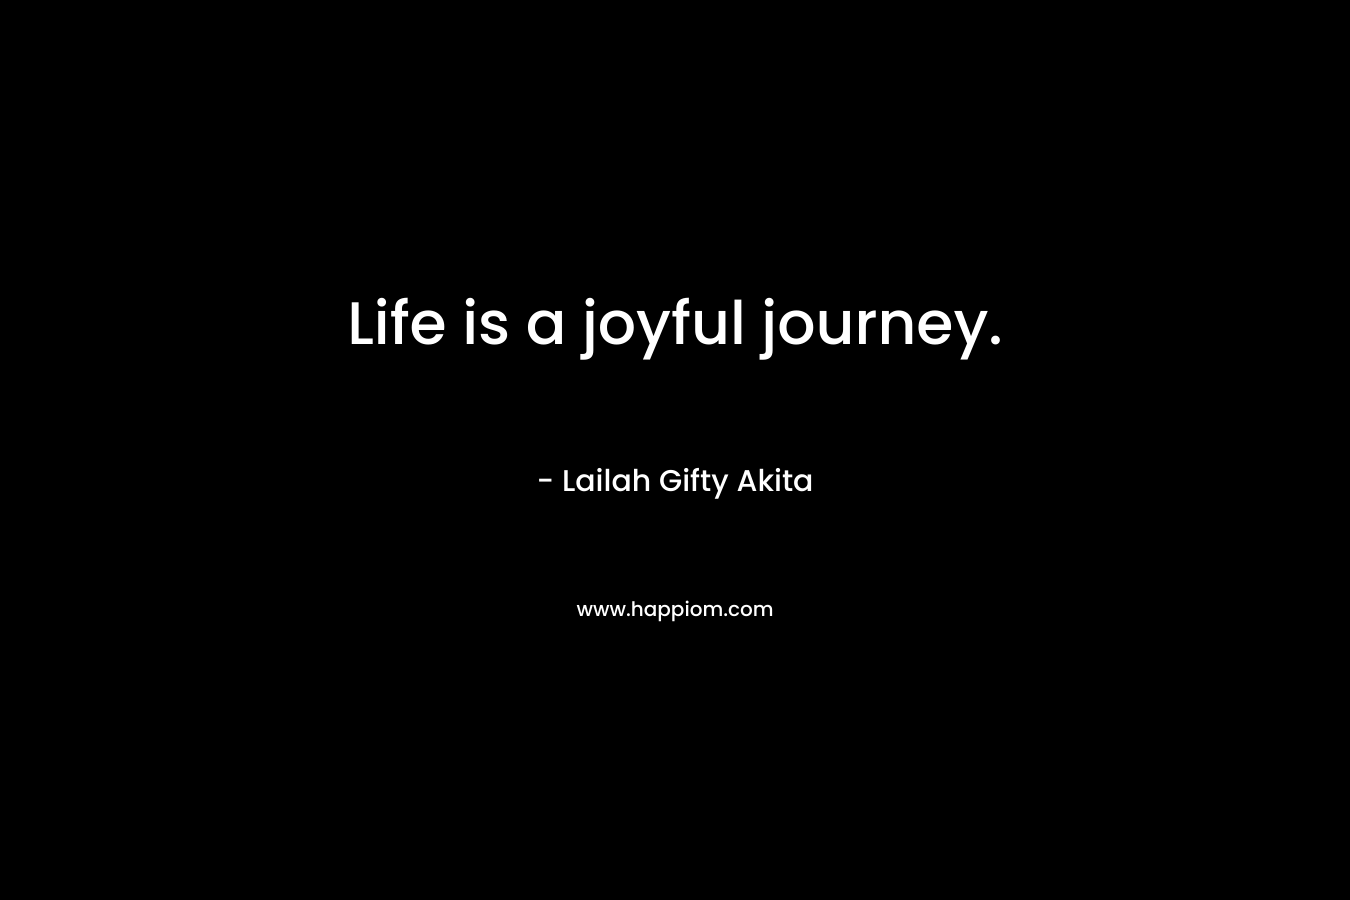 Life is a joyful journey.